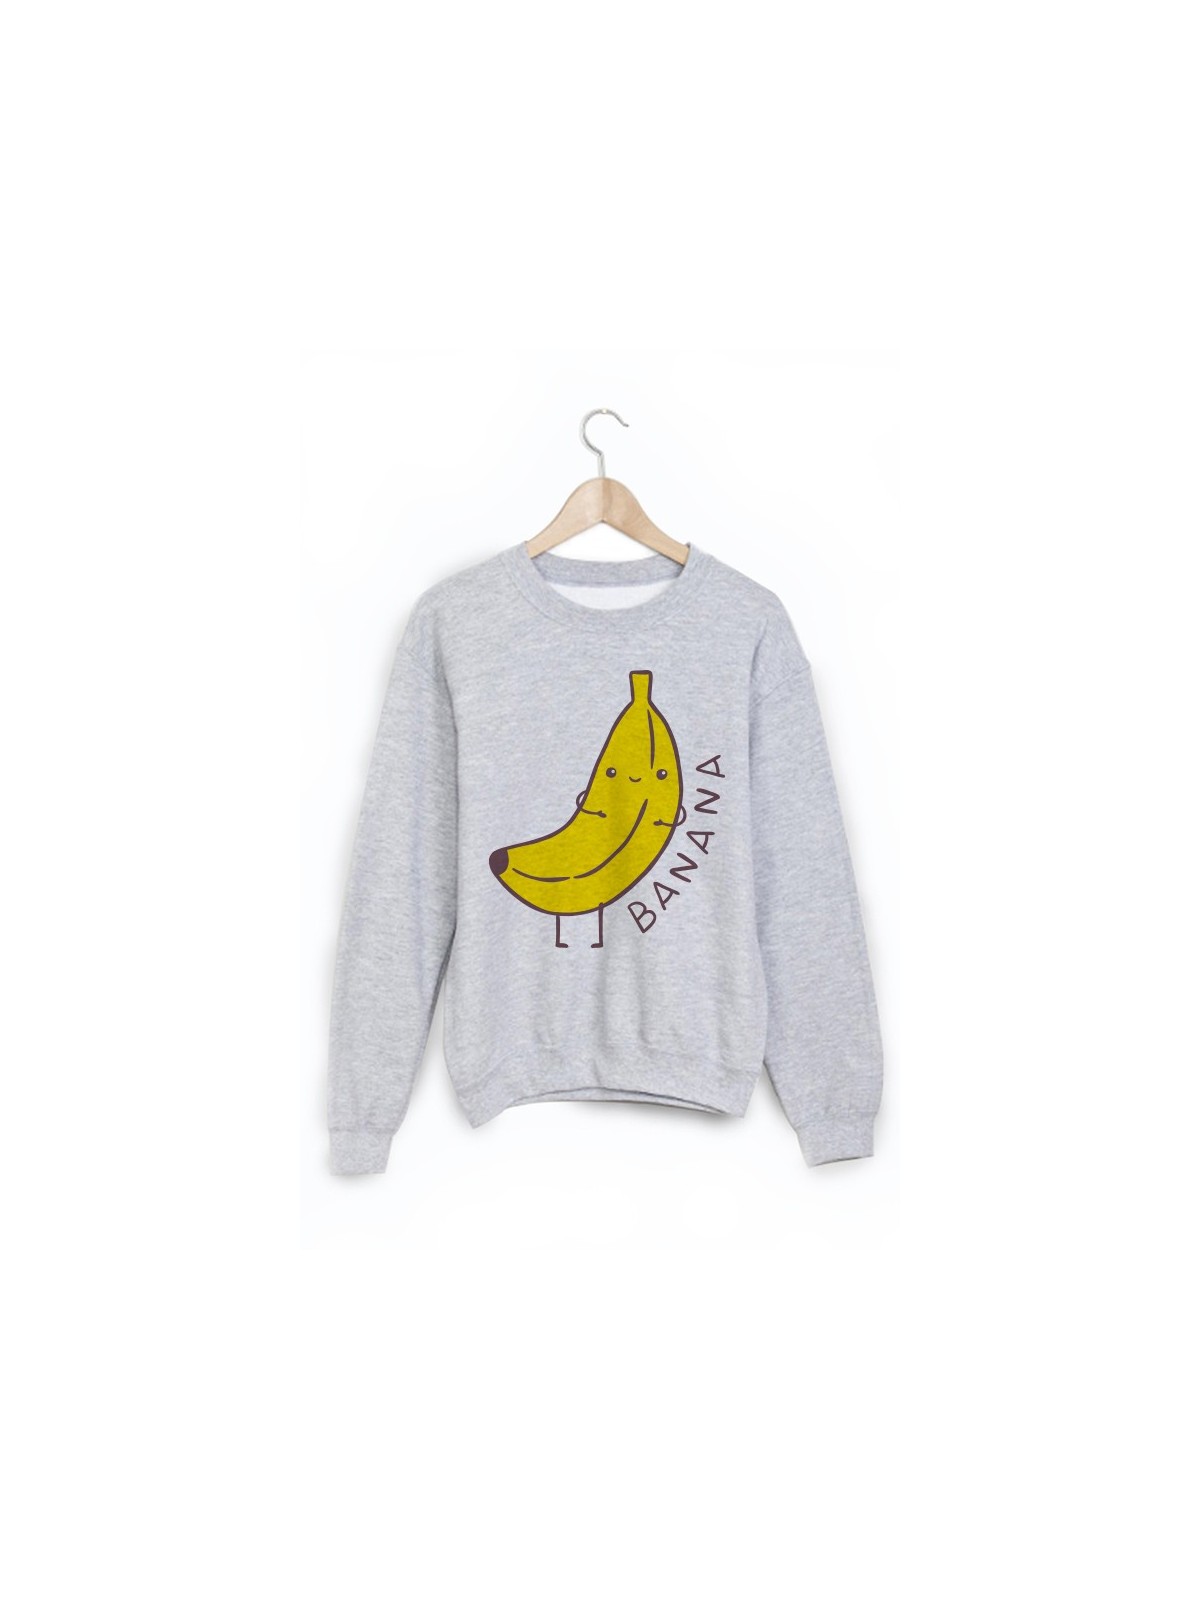 Sweat-Shirt banane ref 998